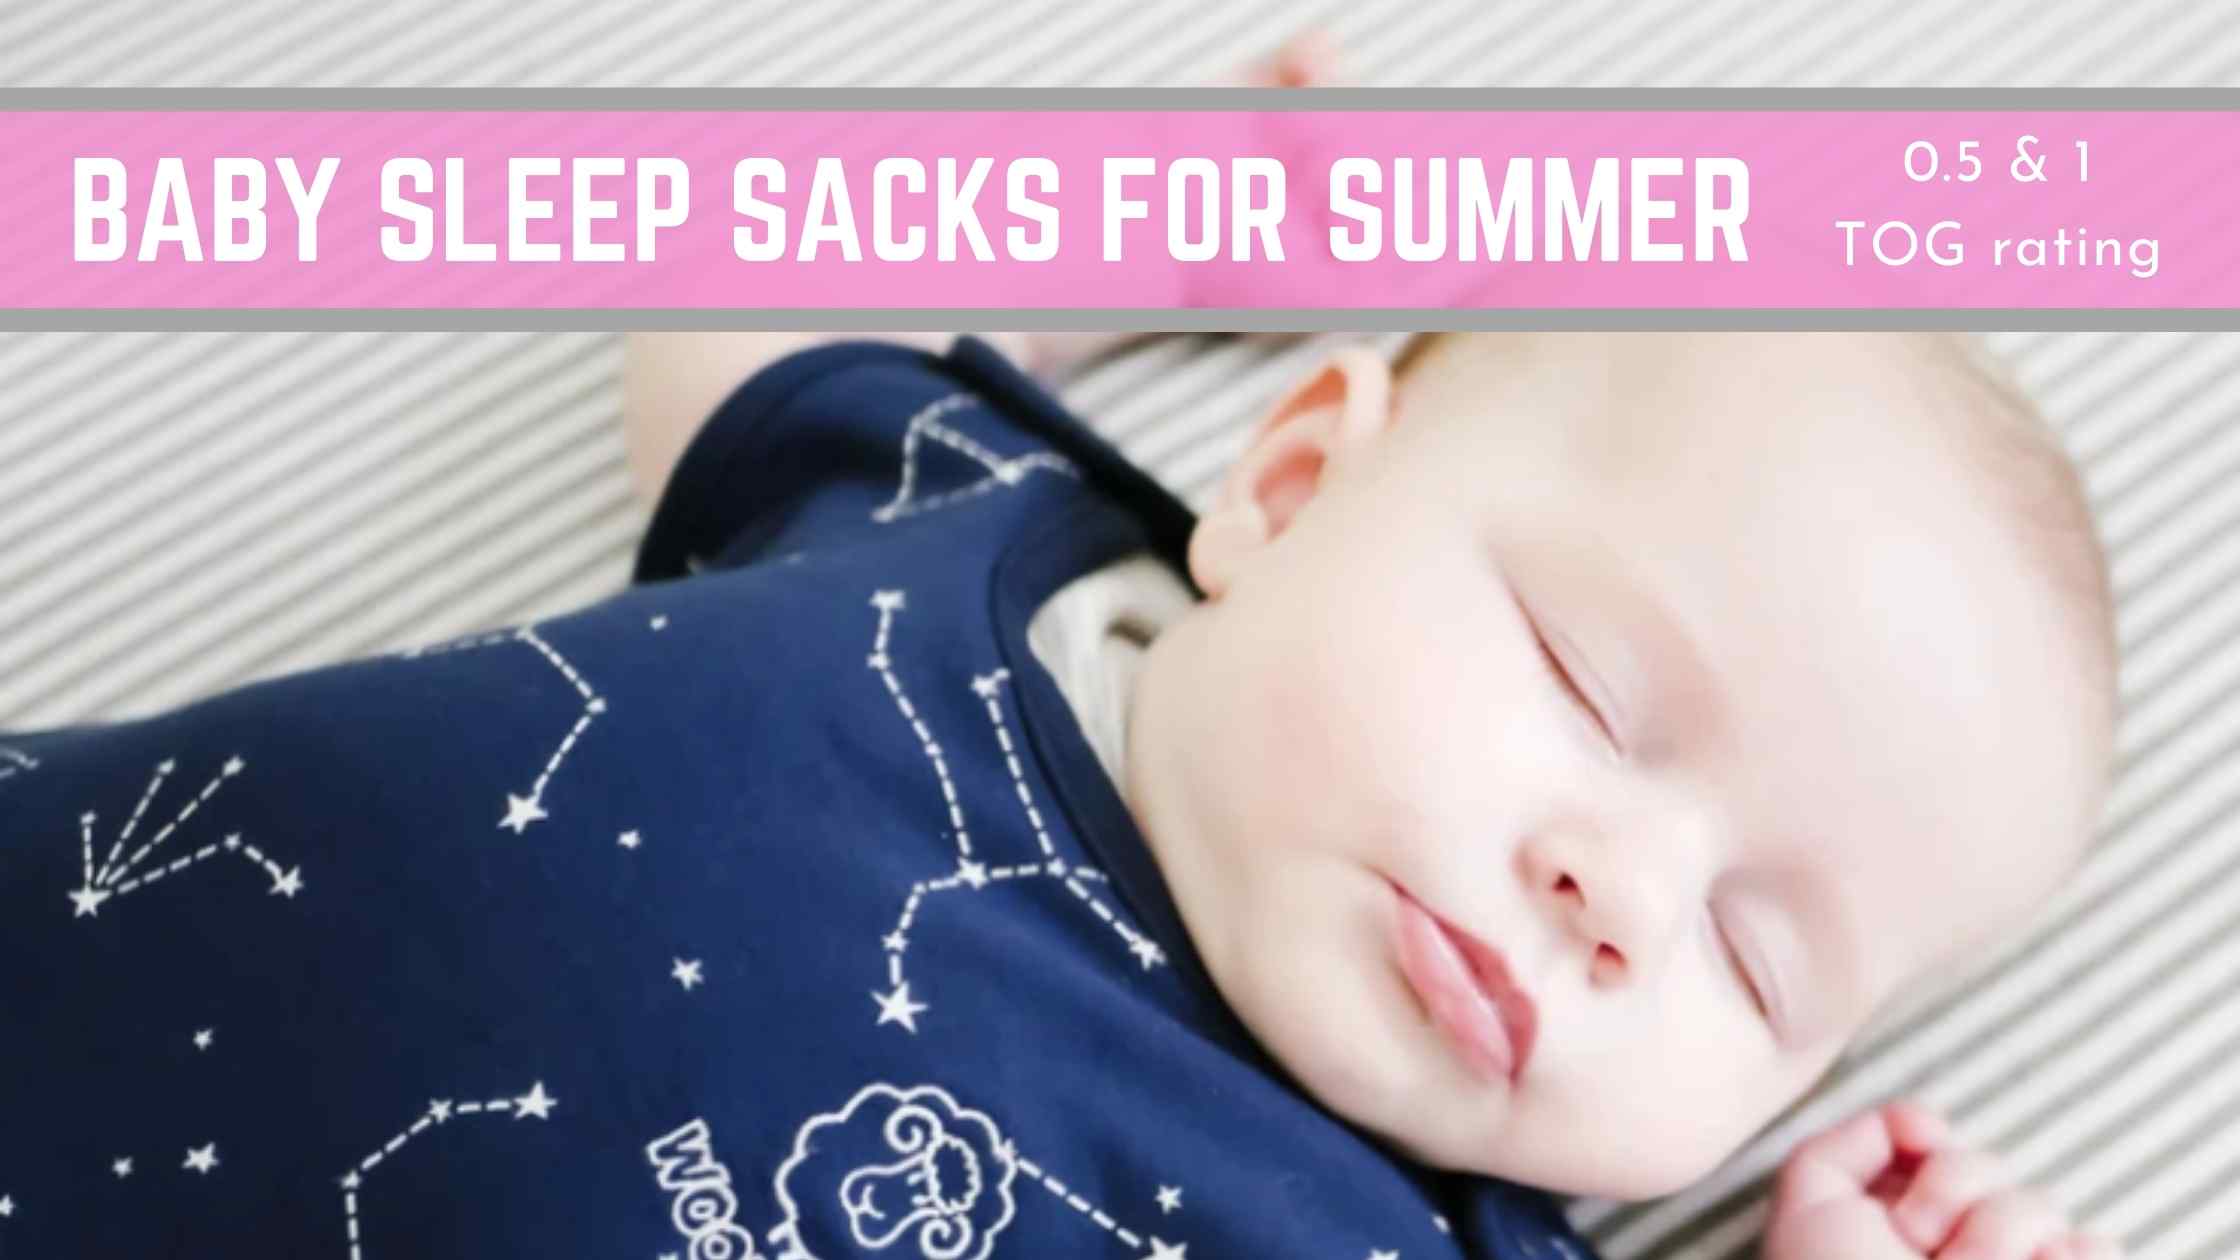 10 Best Baby Sleep Sacks for Summer (0.5 & 1 TOG)